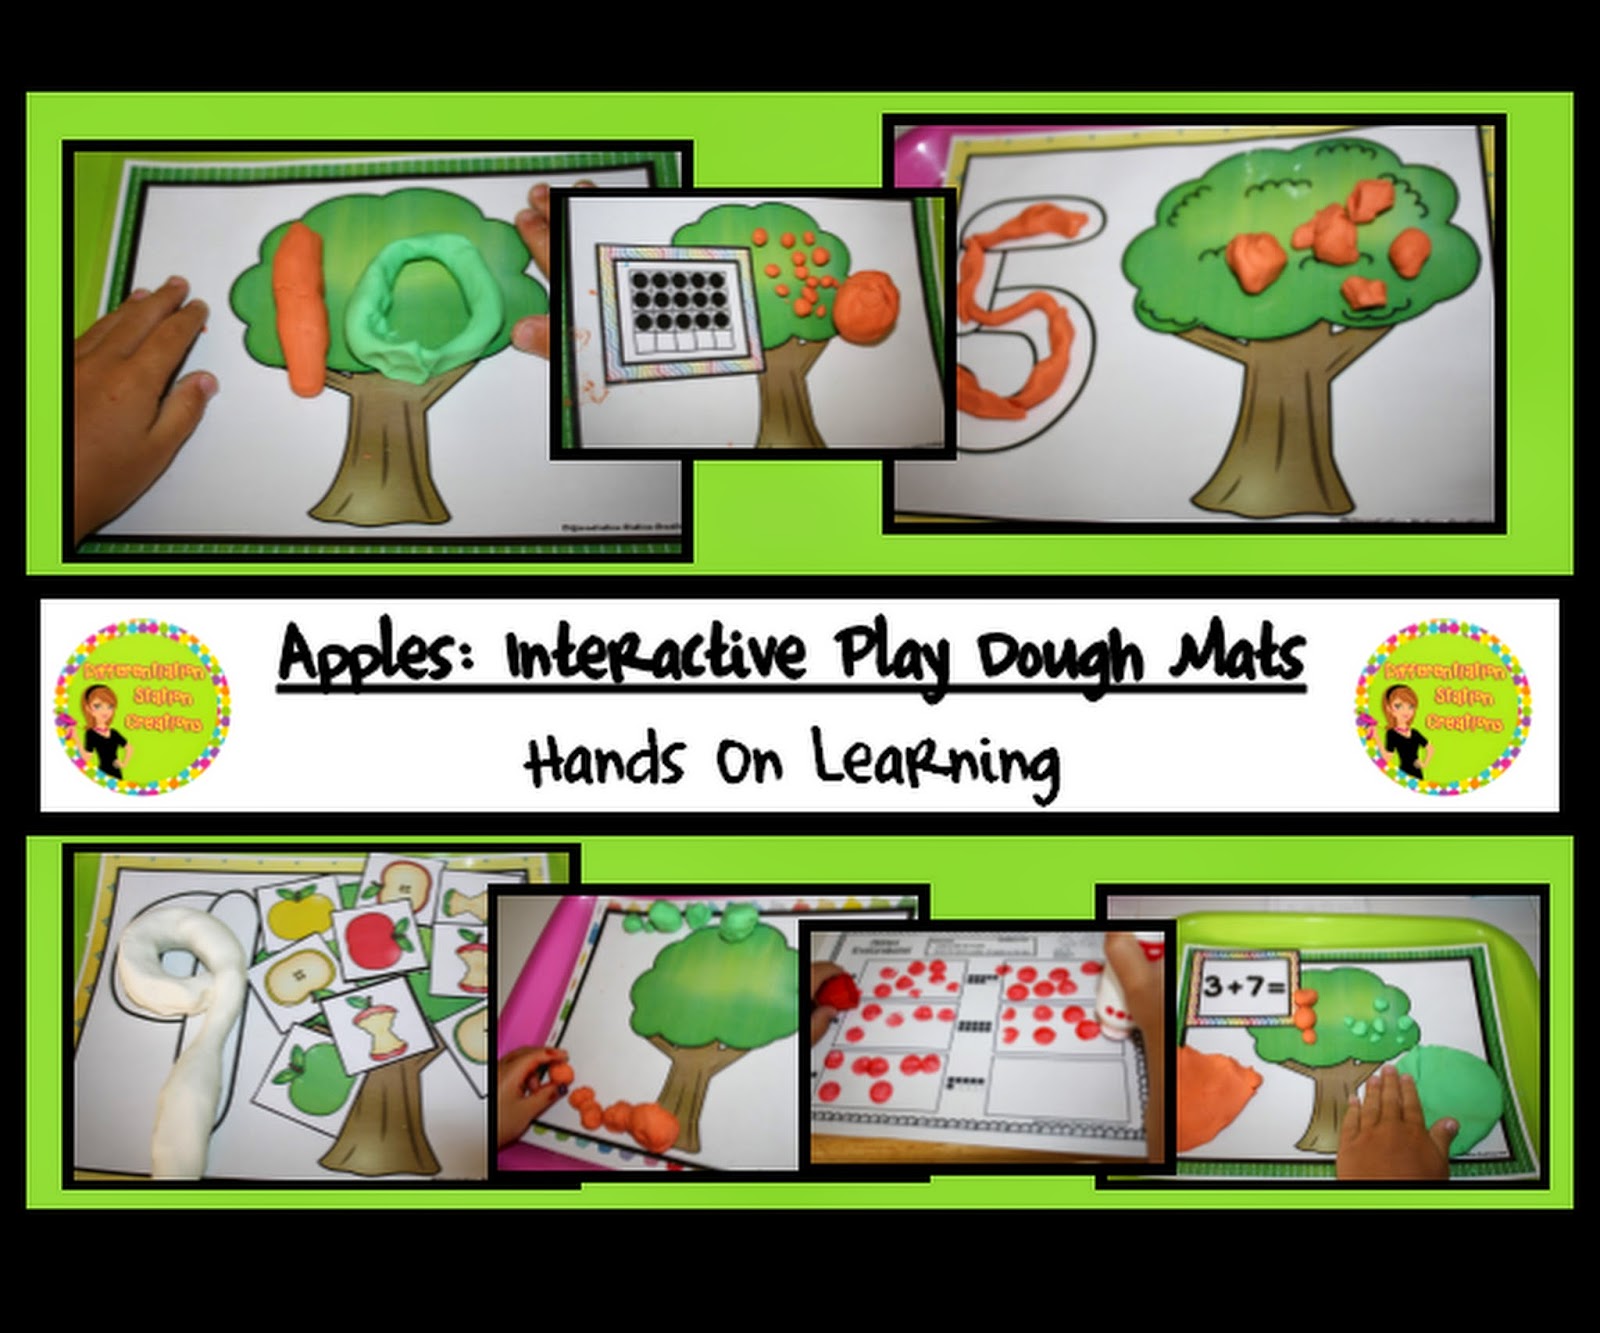 http://www.teacherspayteachers.com/Product/Apples-Interactive-Play-Dough-Mats-Counting-Centers-Printables-1353686